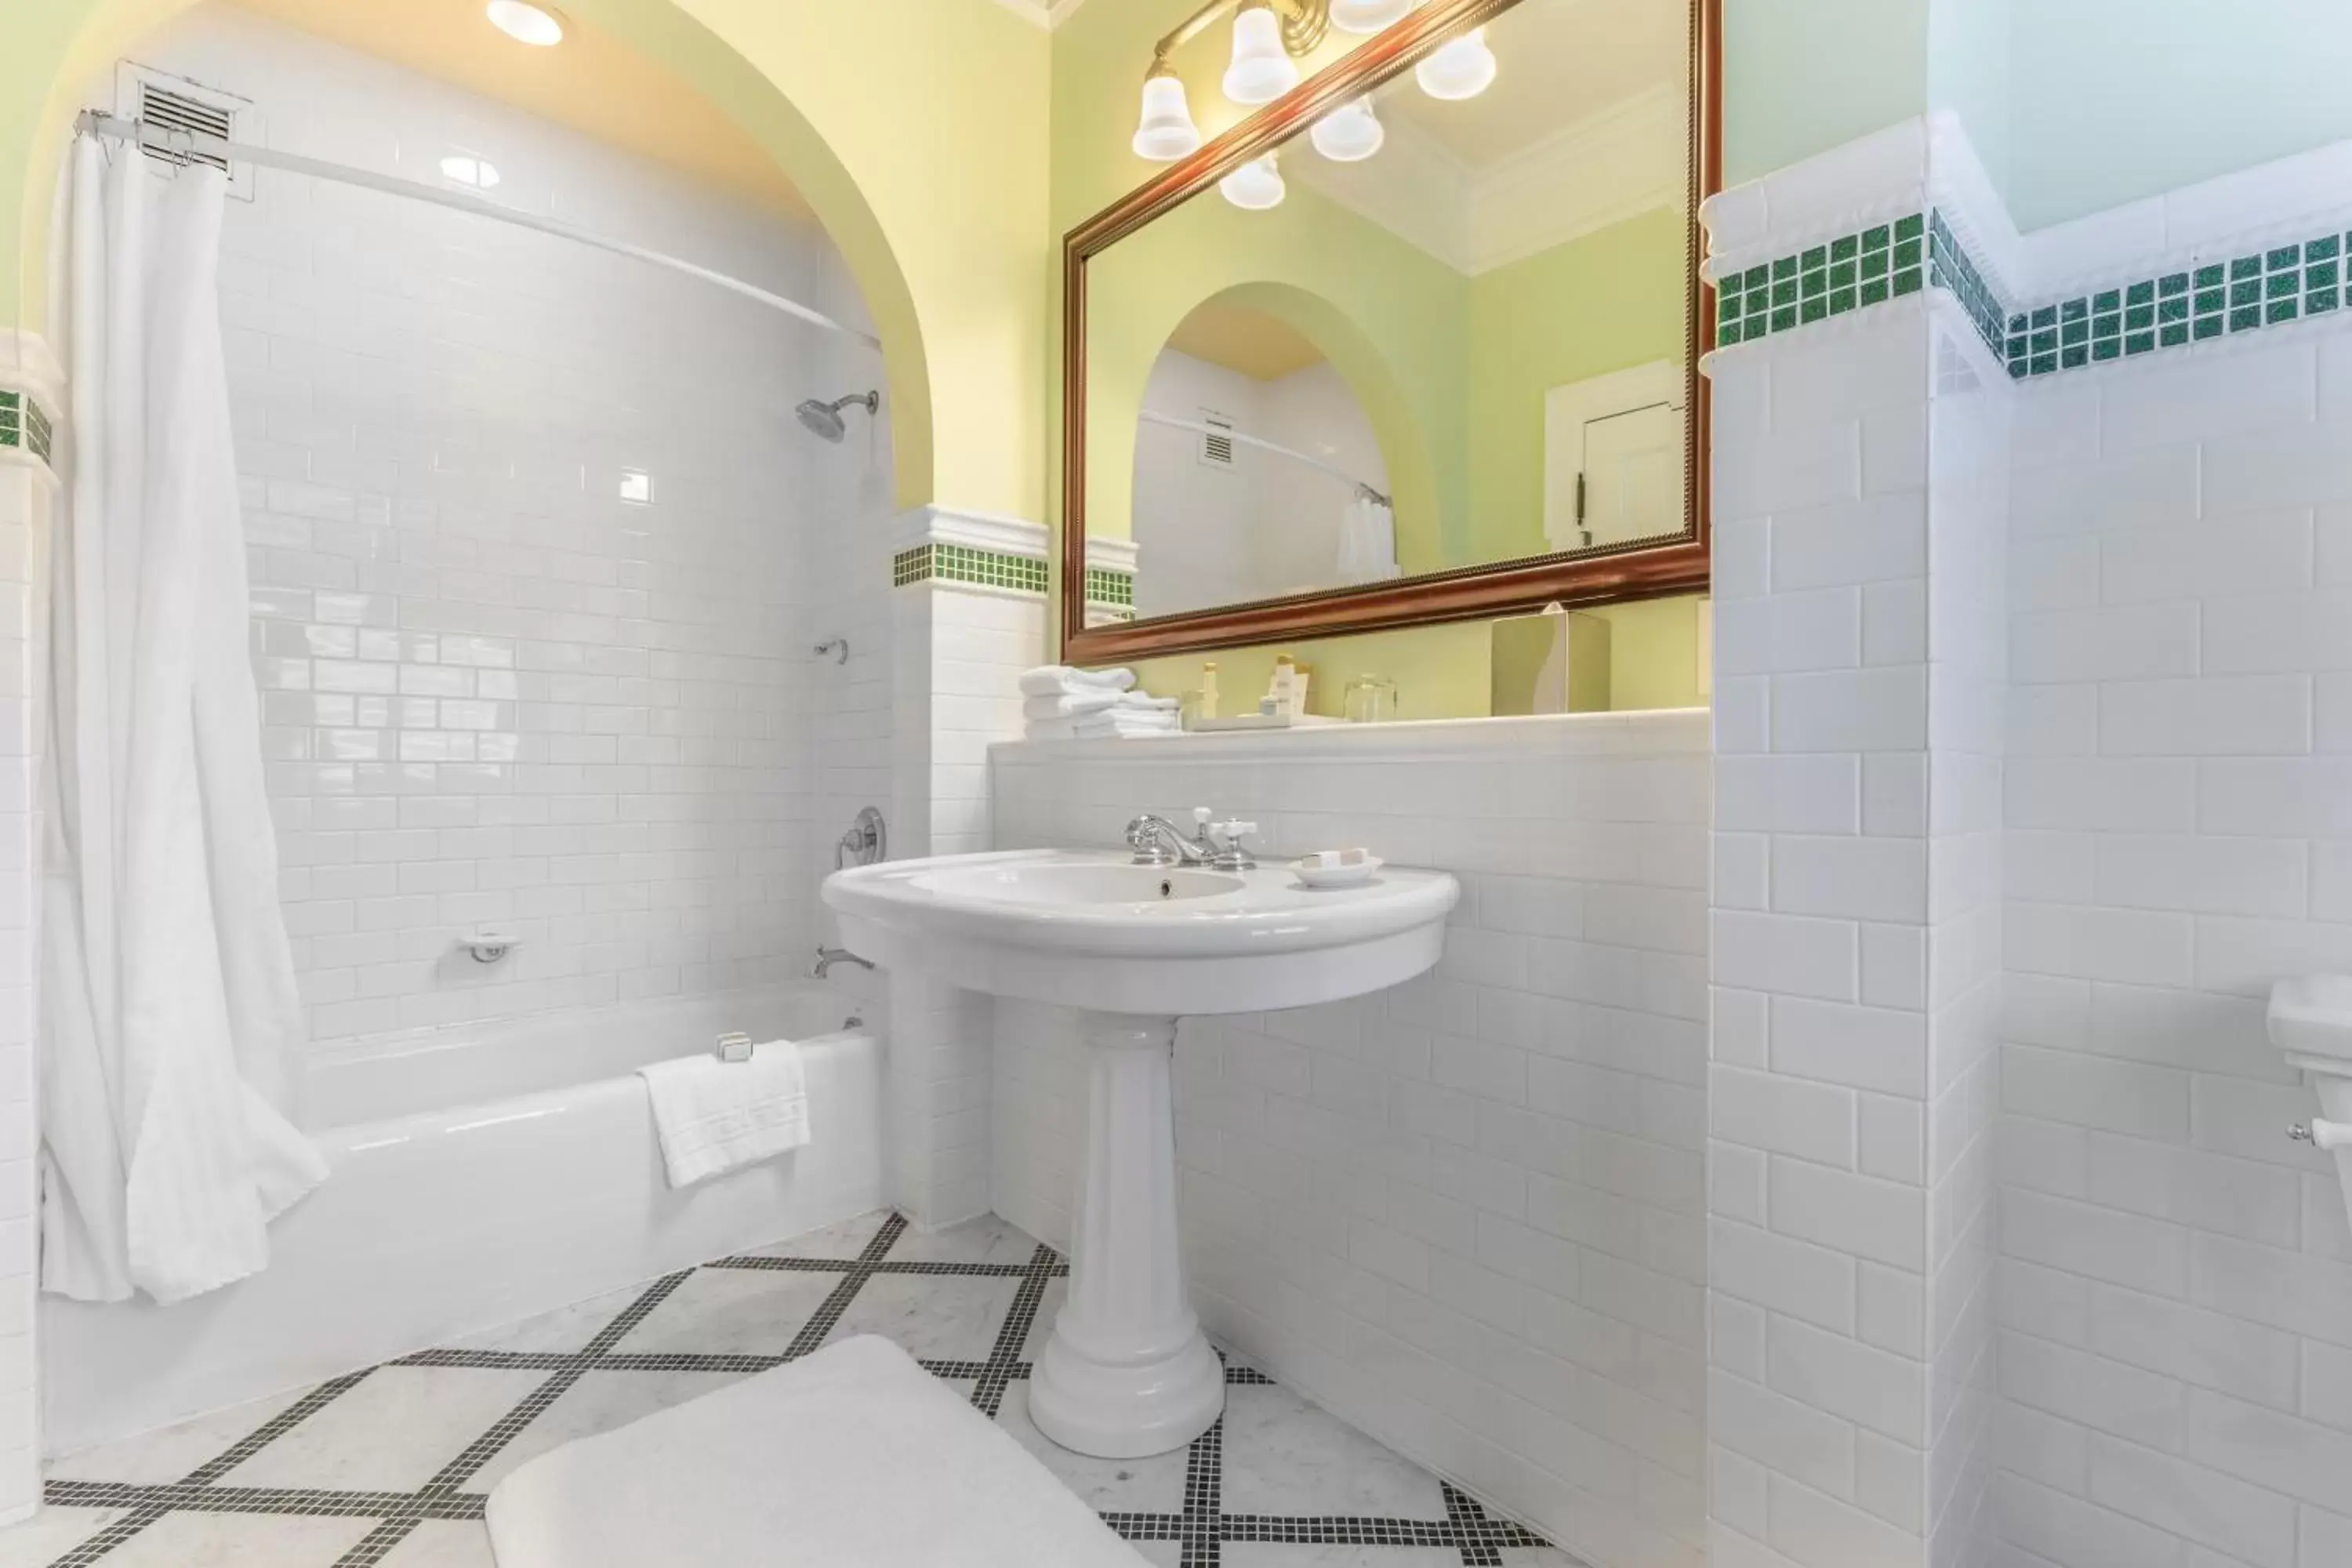 Bathroom in The Omni Homestead Resort